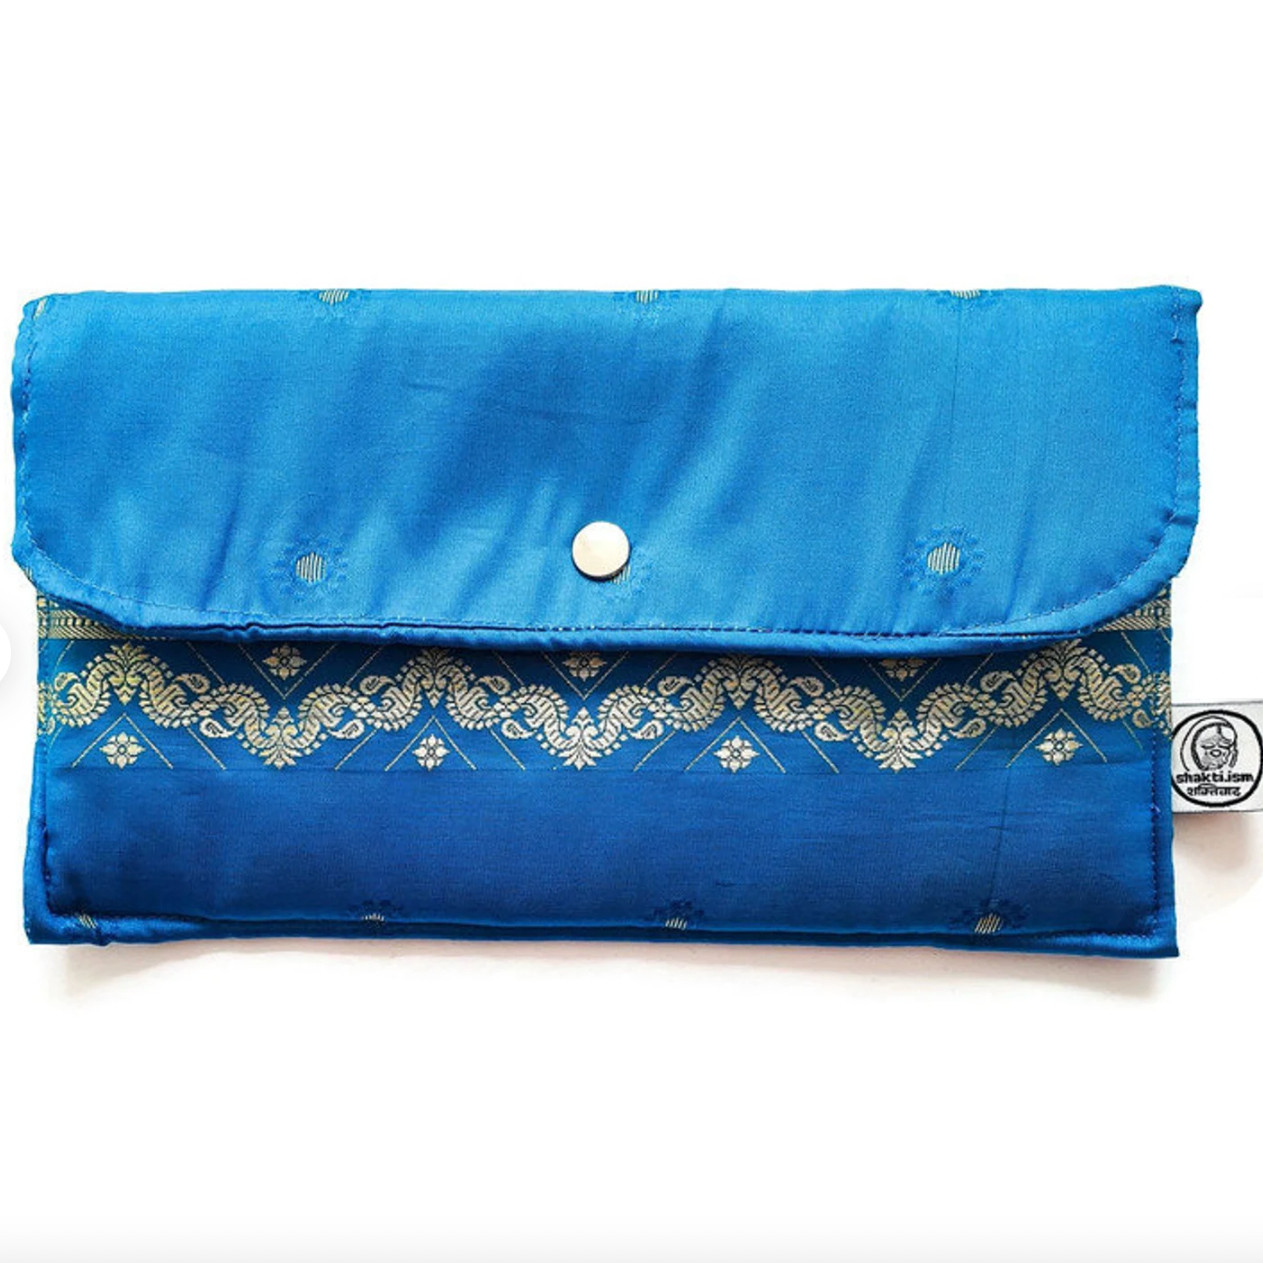 Handmade Sari Clutch Bag - Blue gold